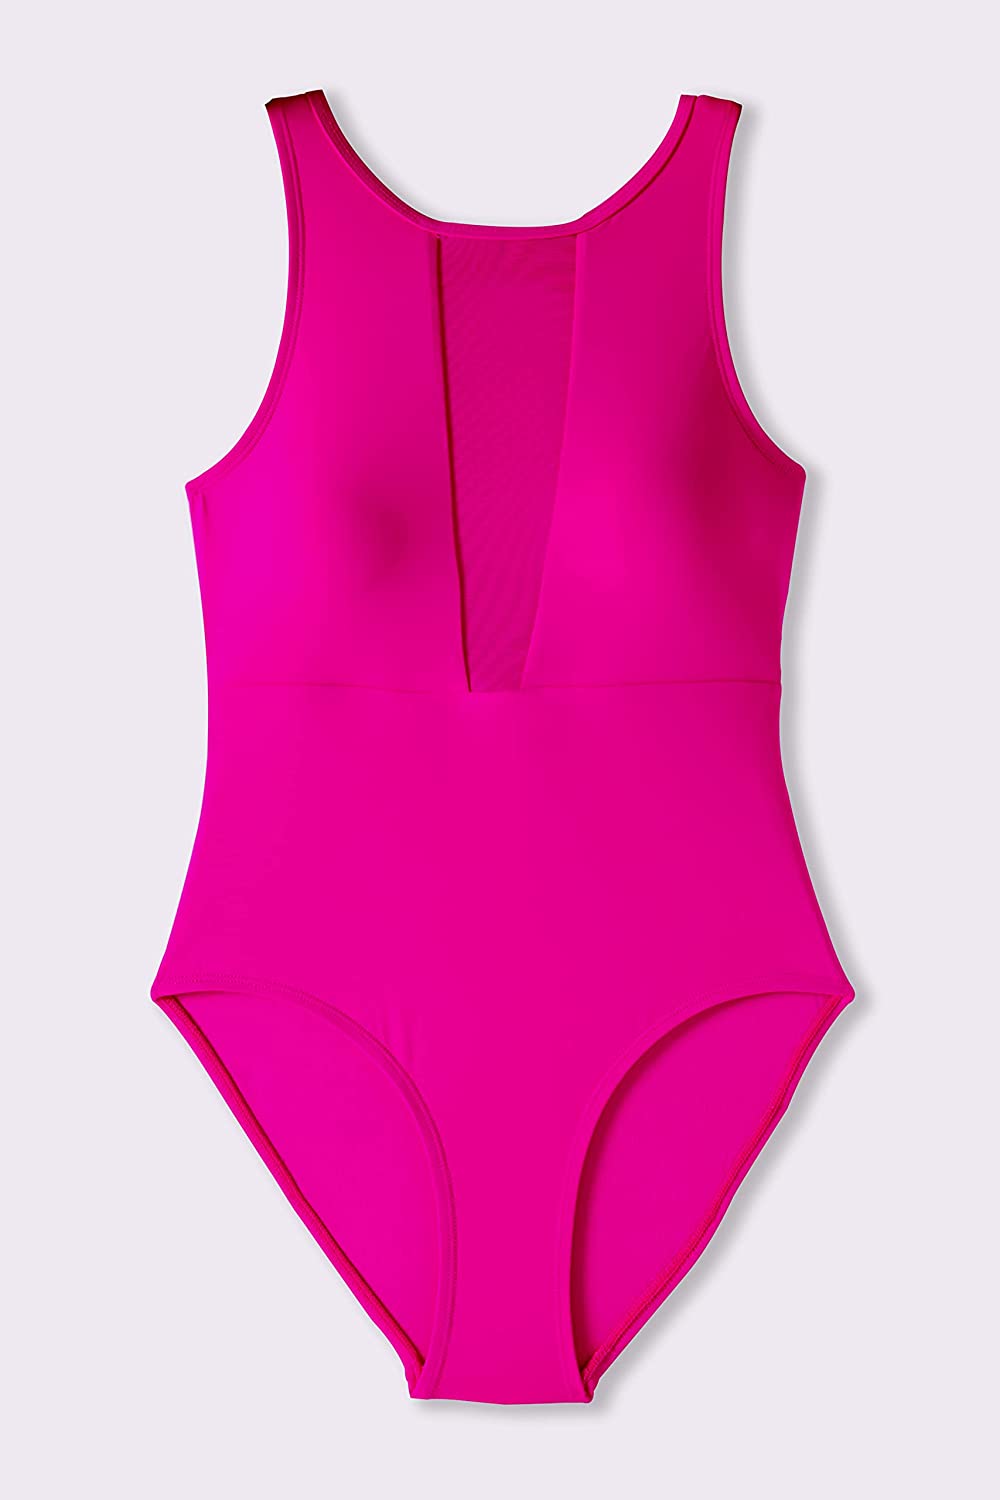 Beautikini Women's One Piece Swimsuit, Mesh High Neck Tummy Control Bathing Suits Monokini Swimwear